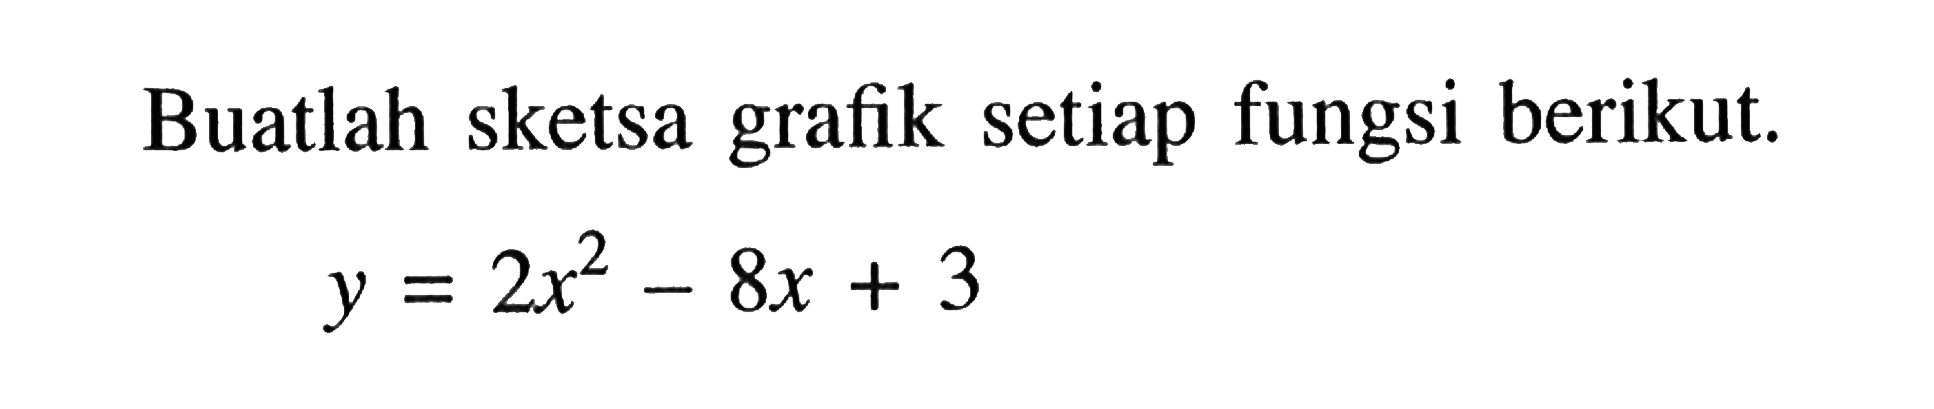 Buatlah sketsa grafik setiap fungsi berikut.y=2x^2-8x+3